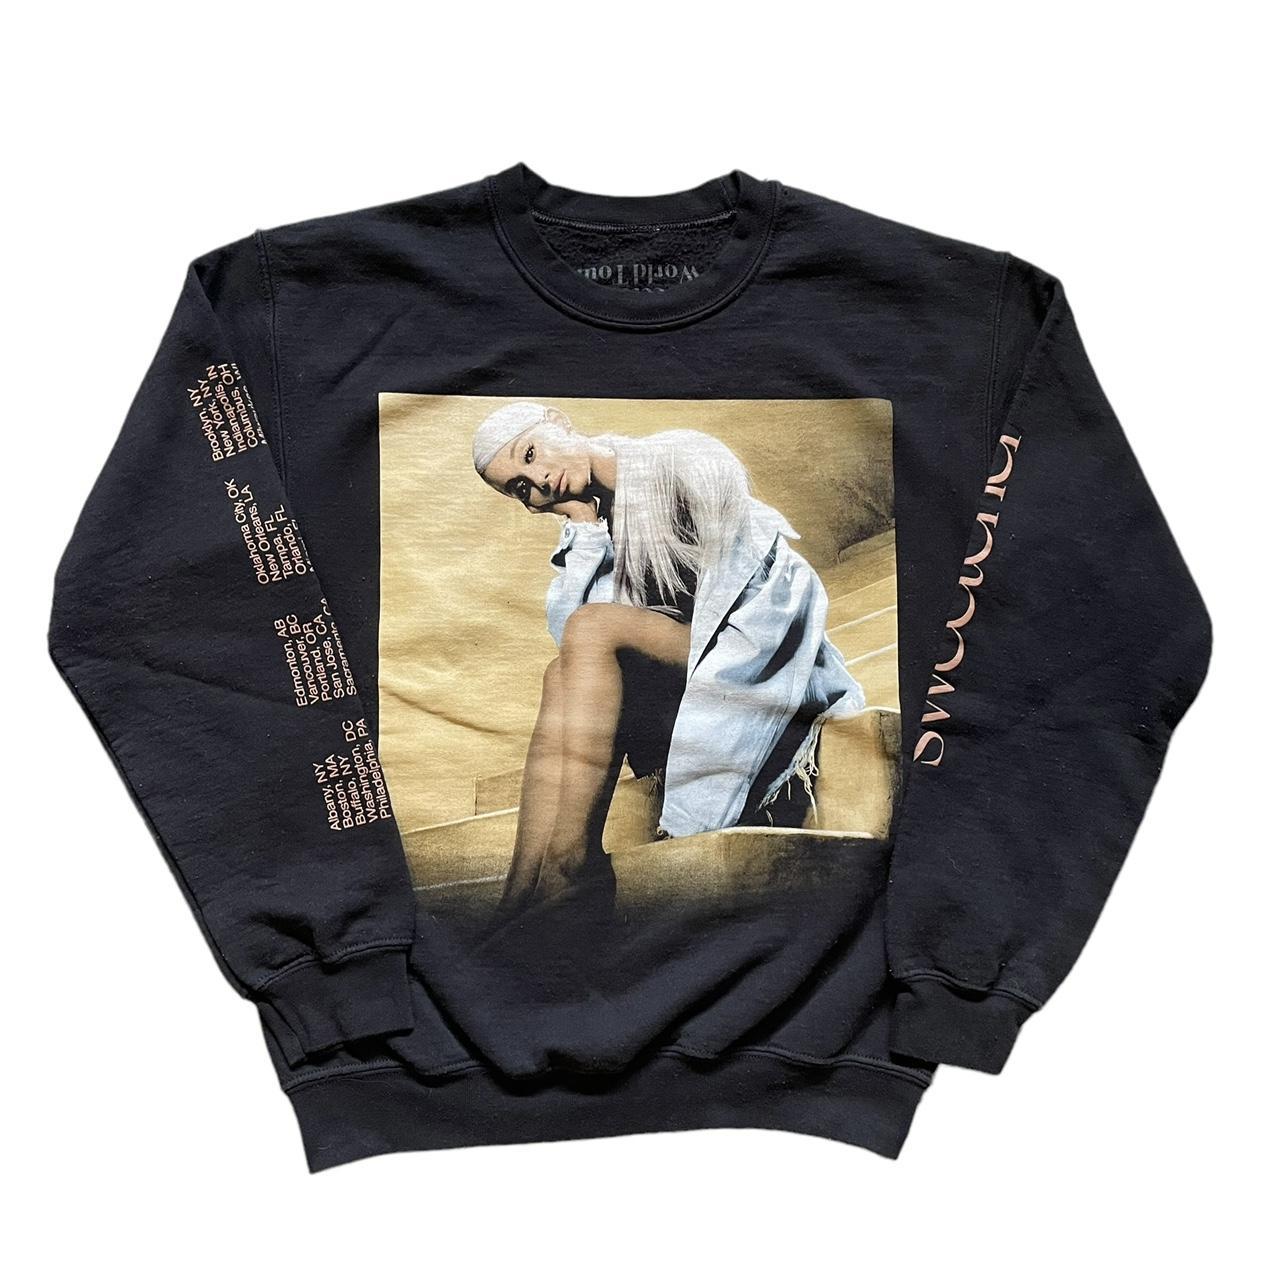 Product Image 1 - Ariana Grande sweetener 2019 Sweatshirt